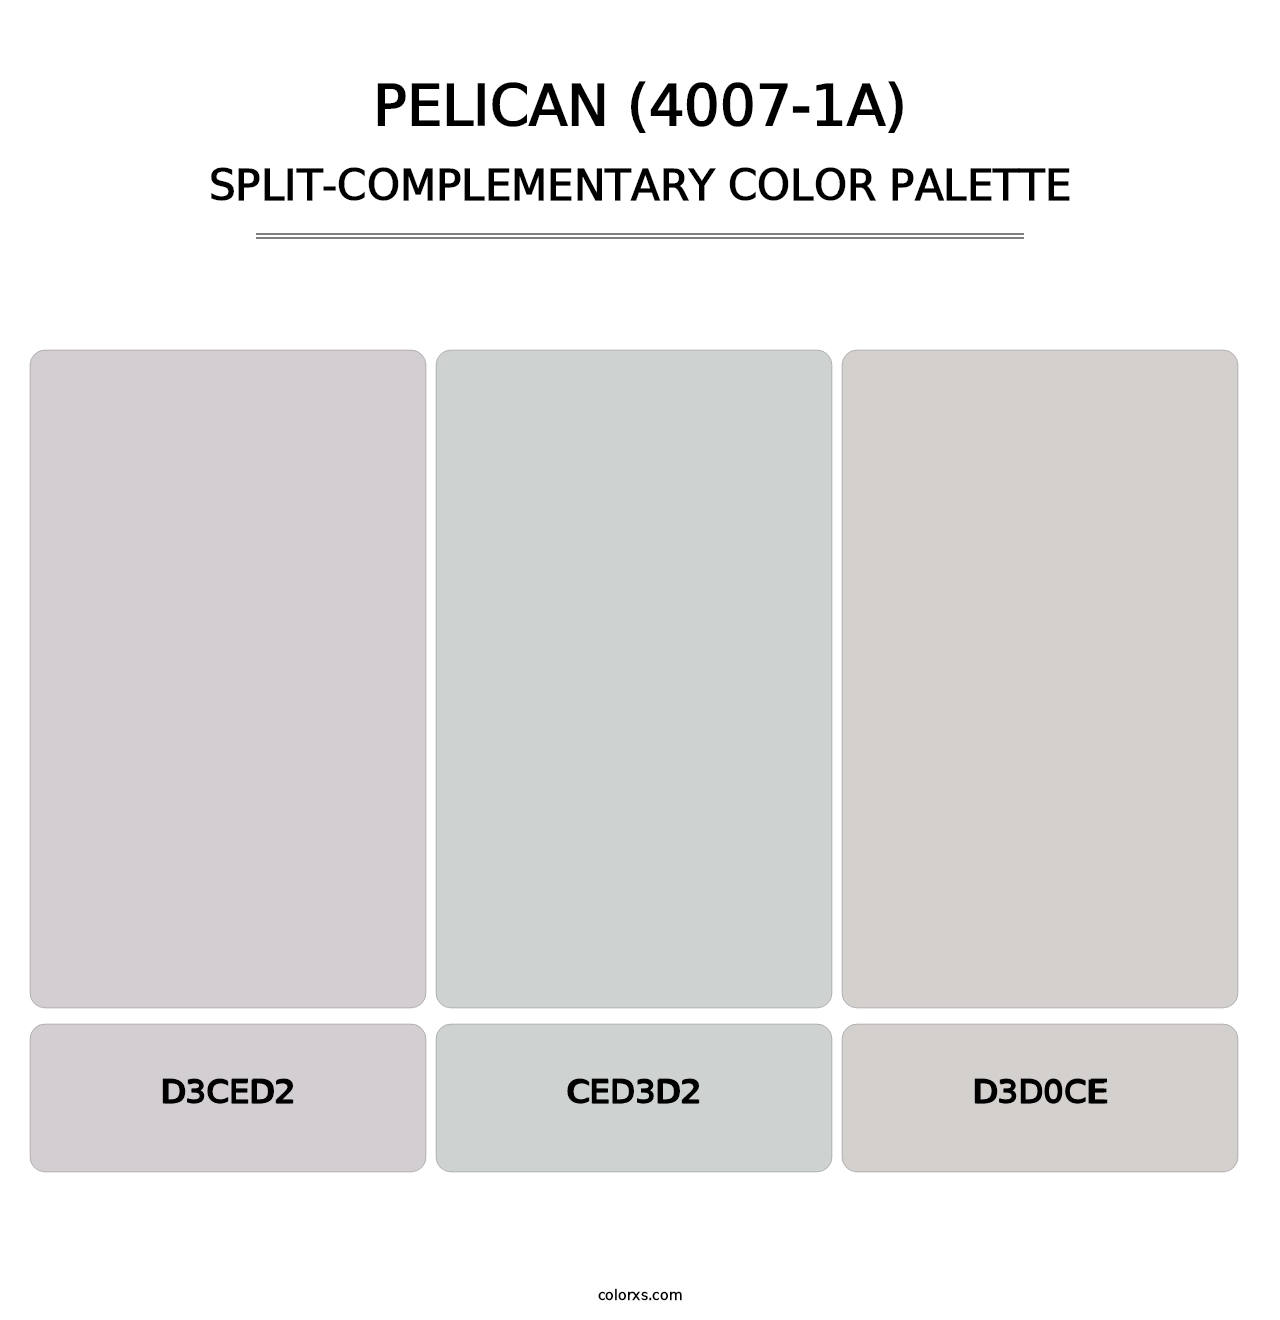 Pelican (4007-1A) - Split-Complementary Color Palette